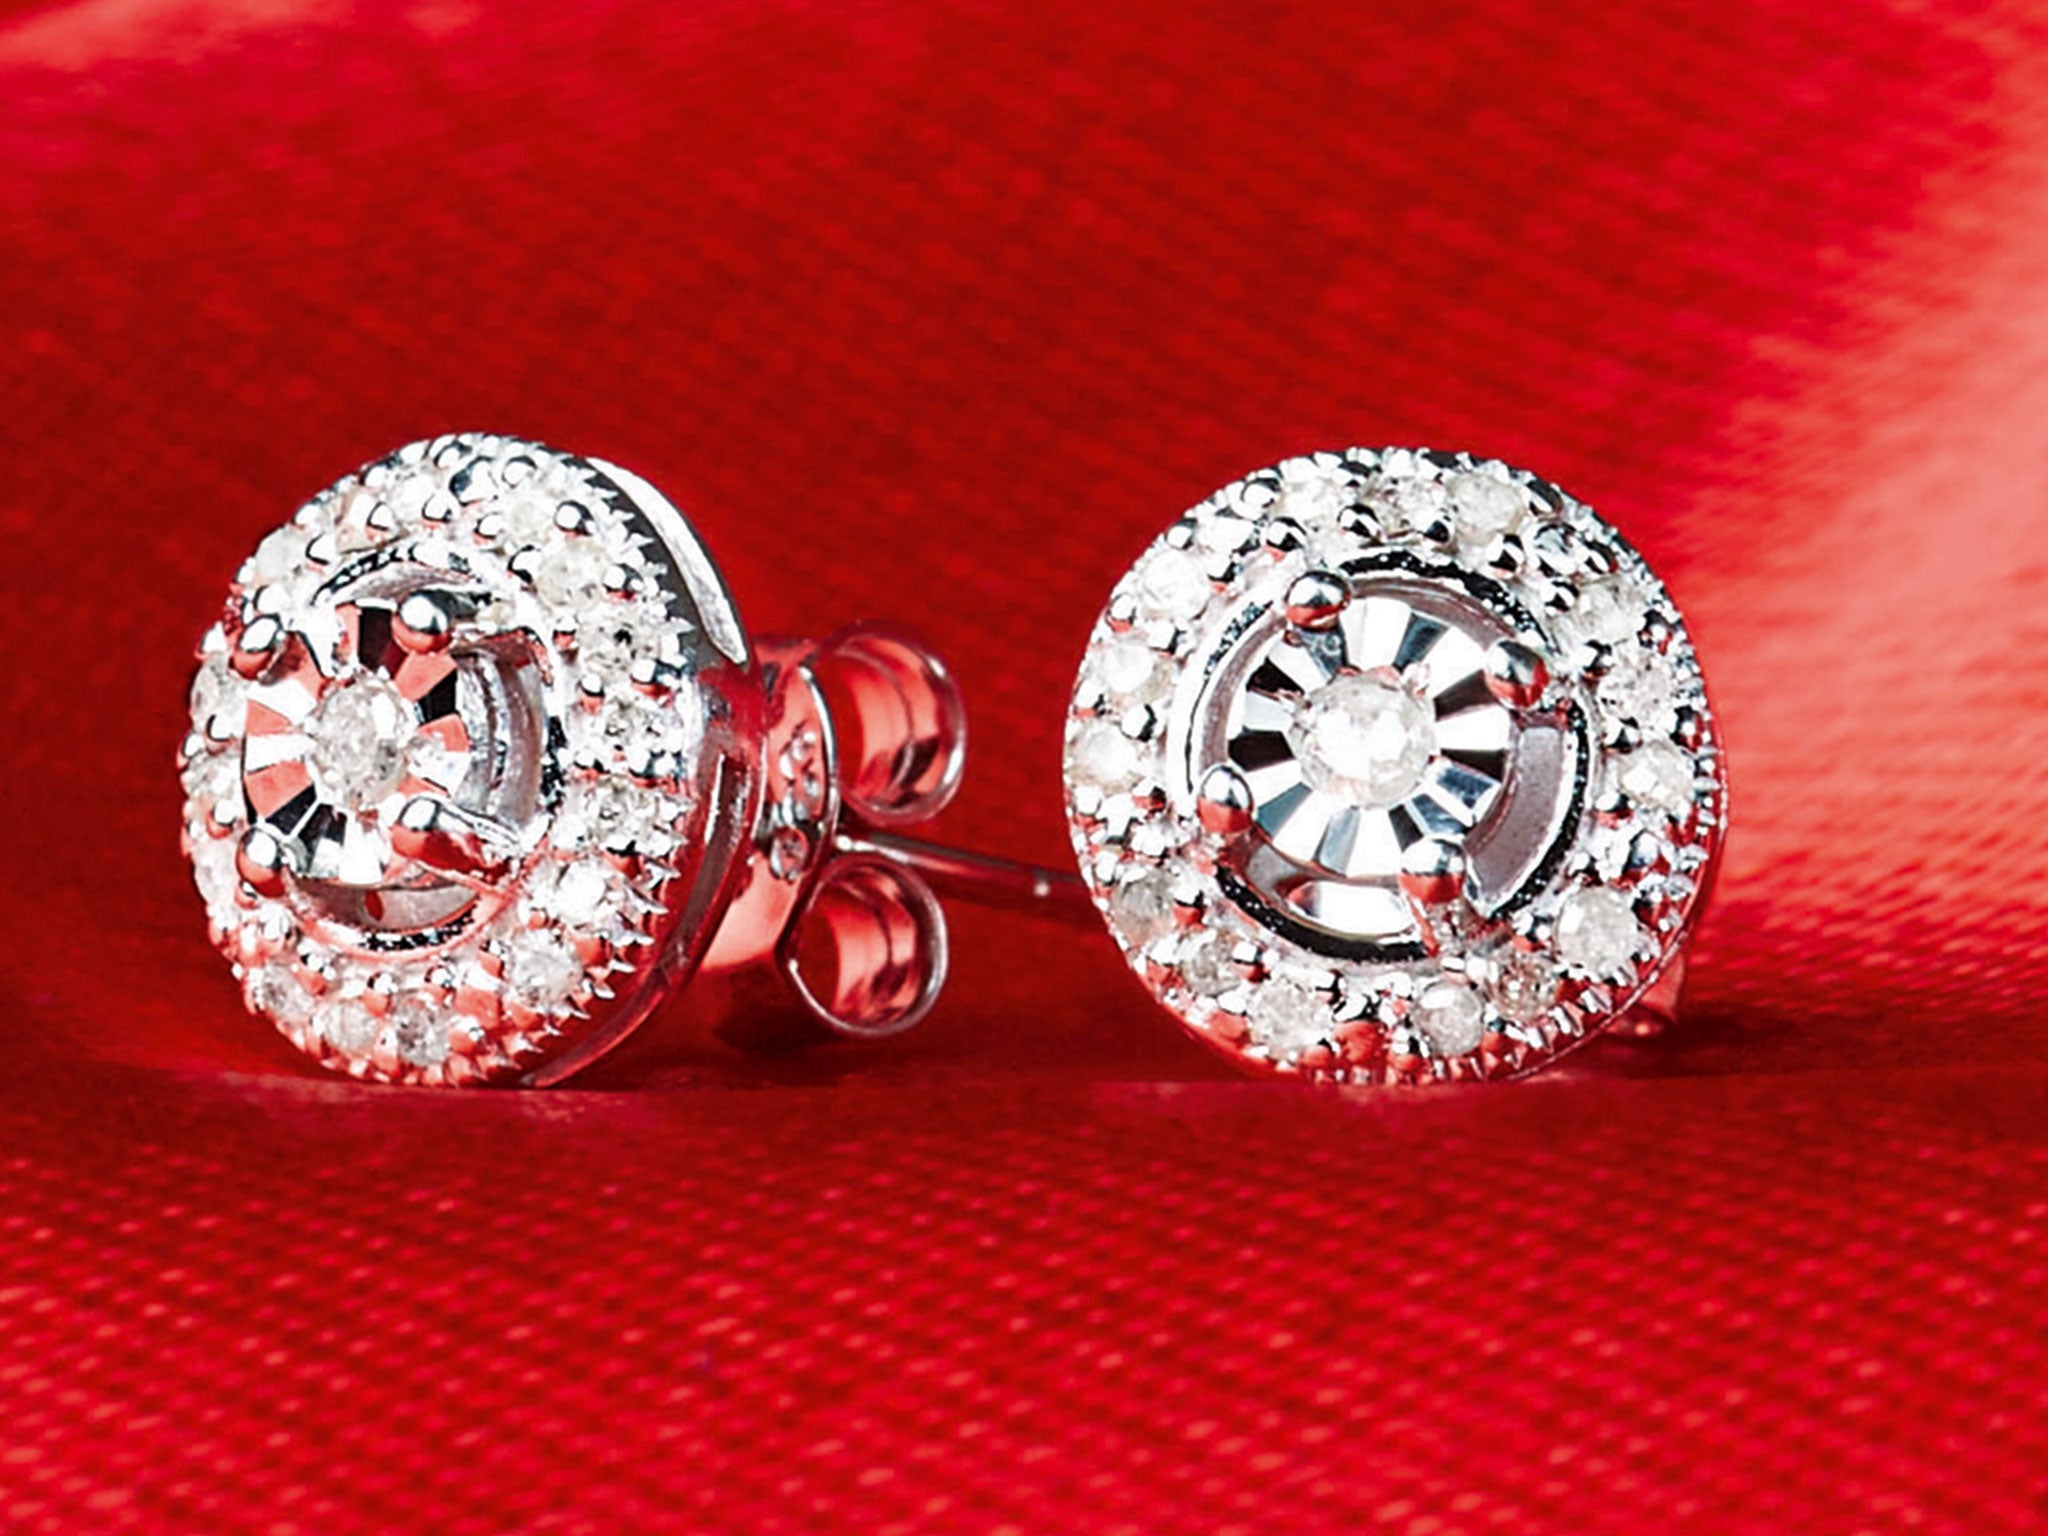 Closer look at Avon's diamond earrings